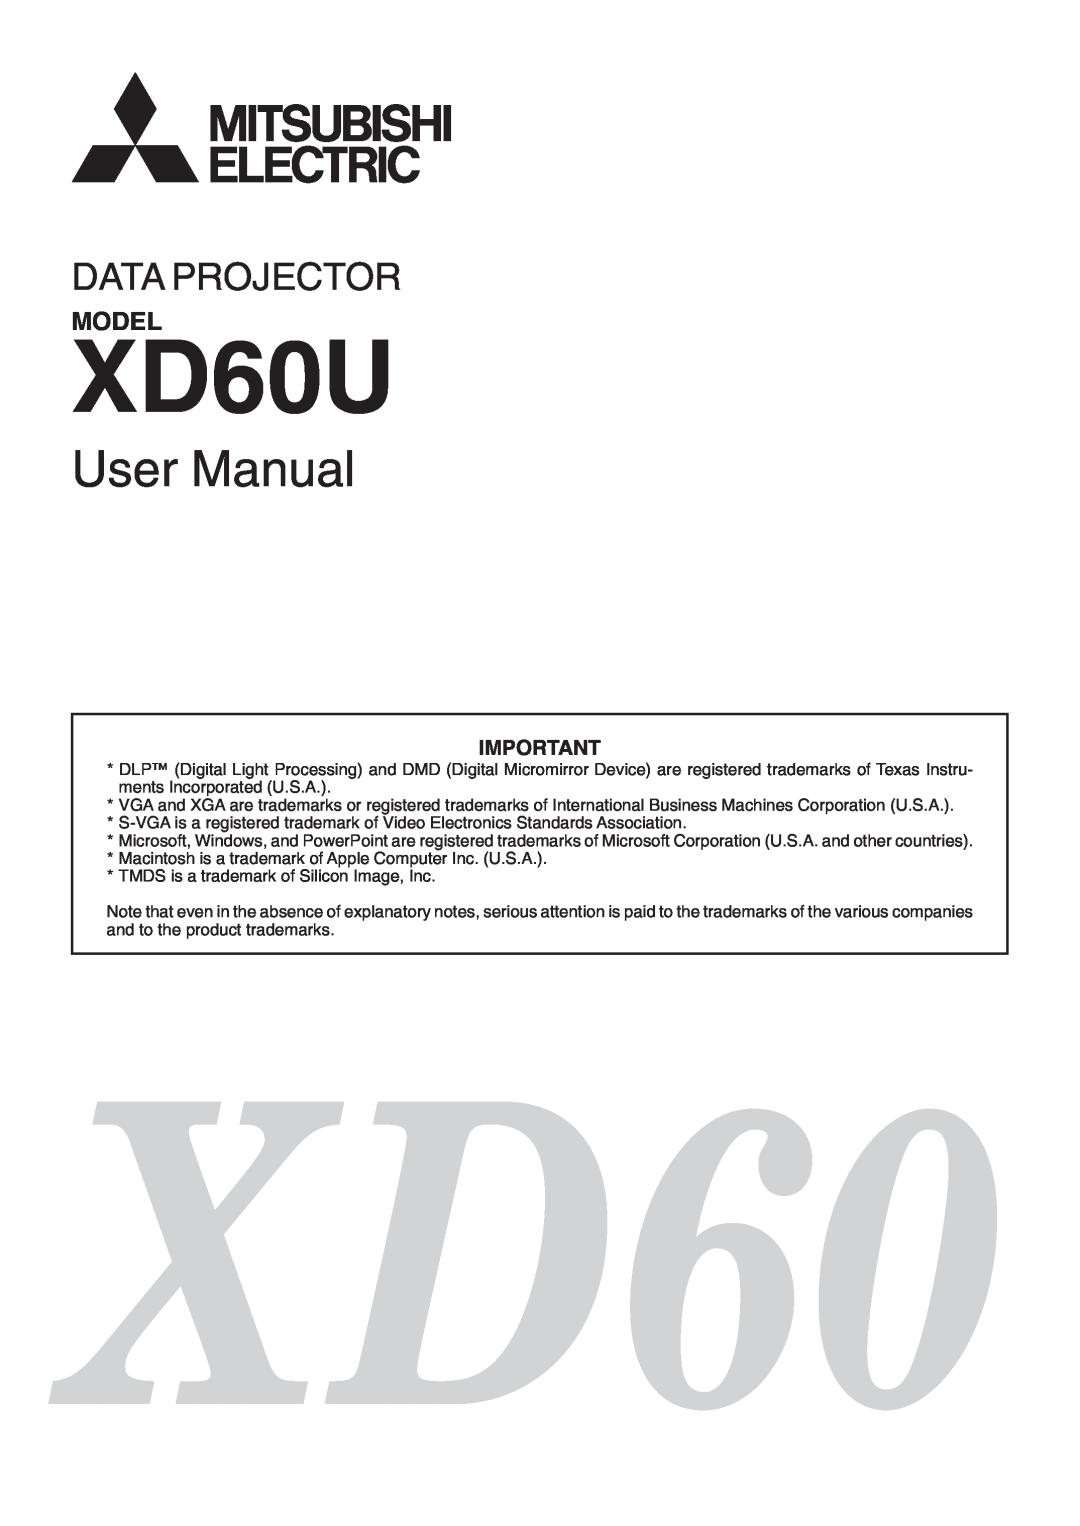 Mitsubishi Electronics XD60U user manual User Manual, Data Projector, Model 